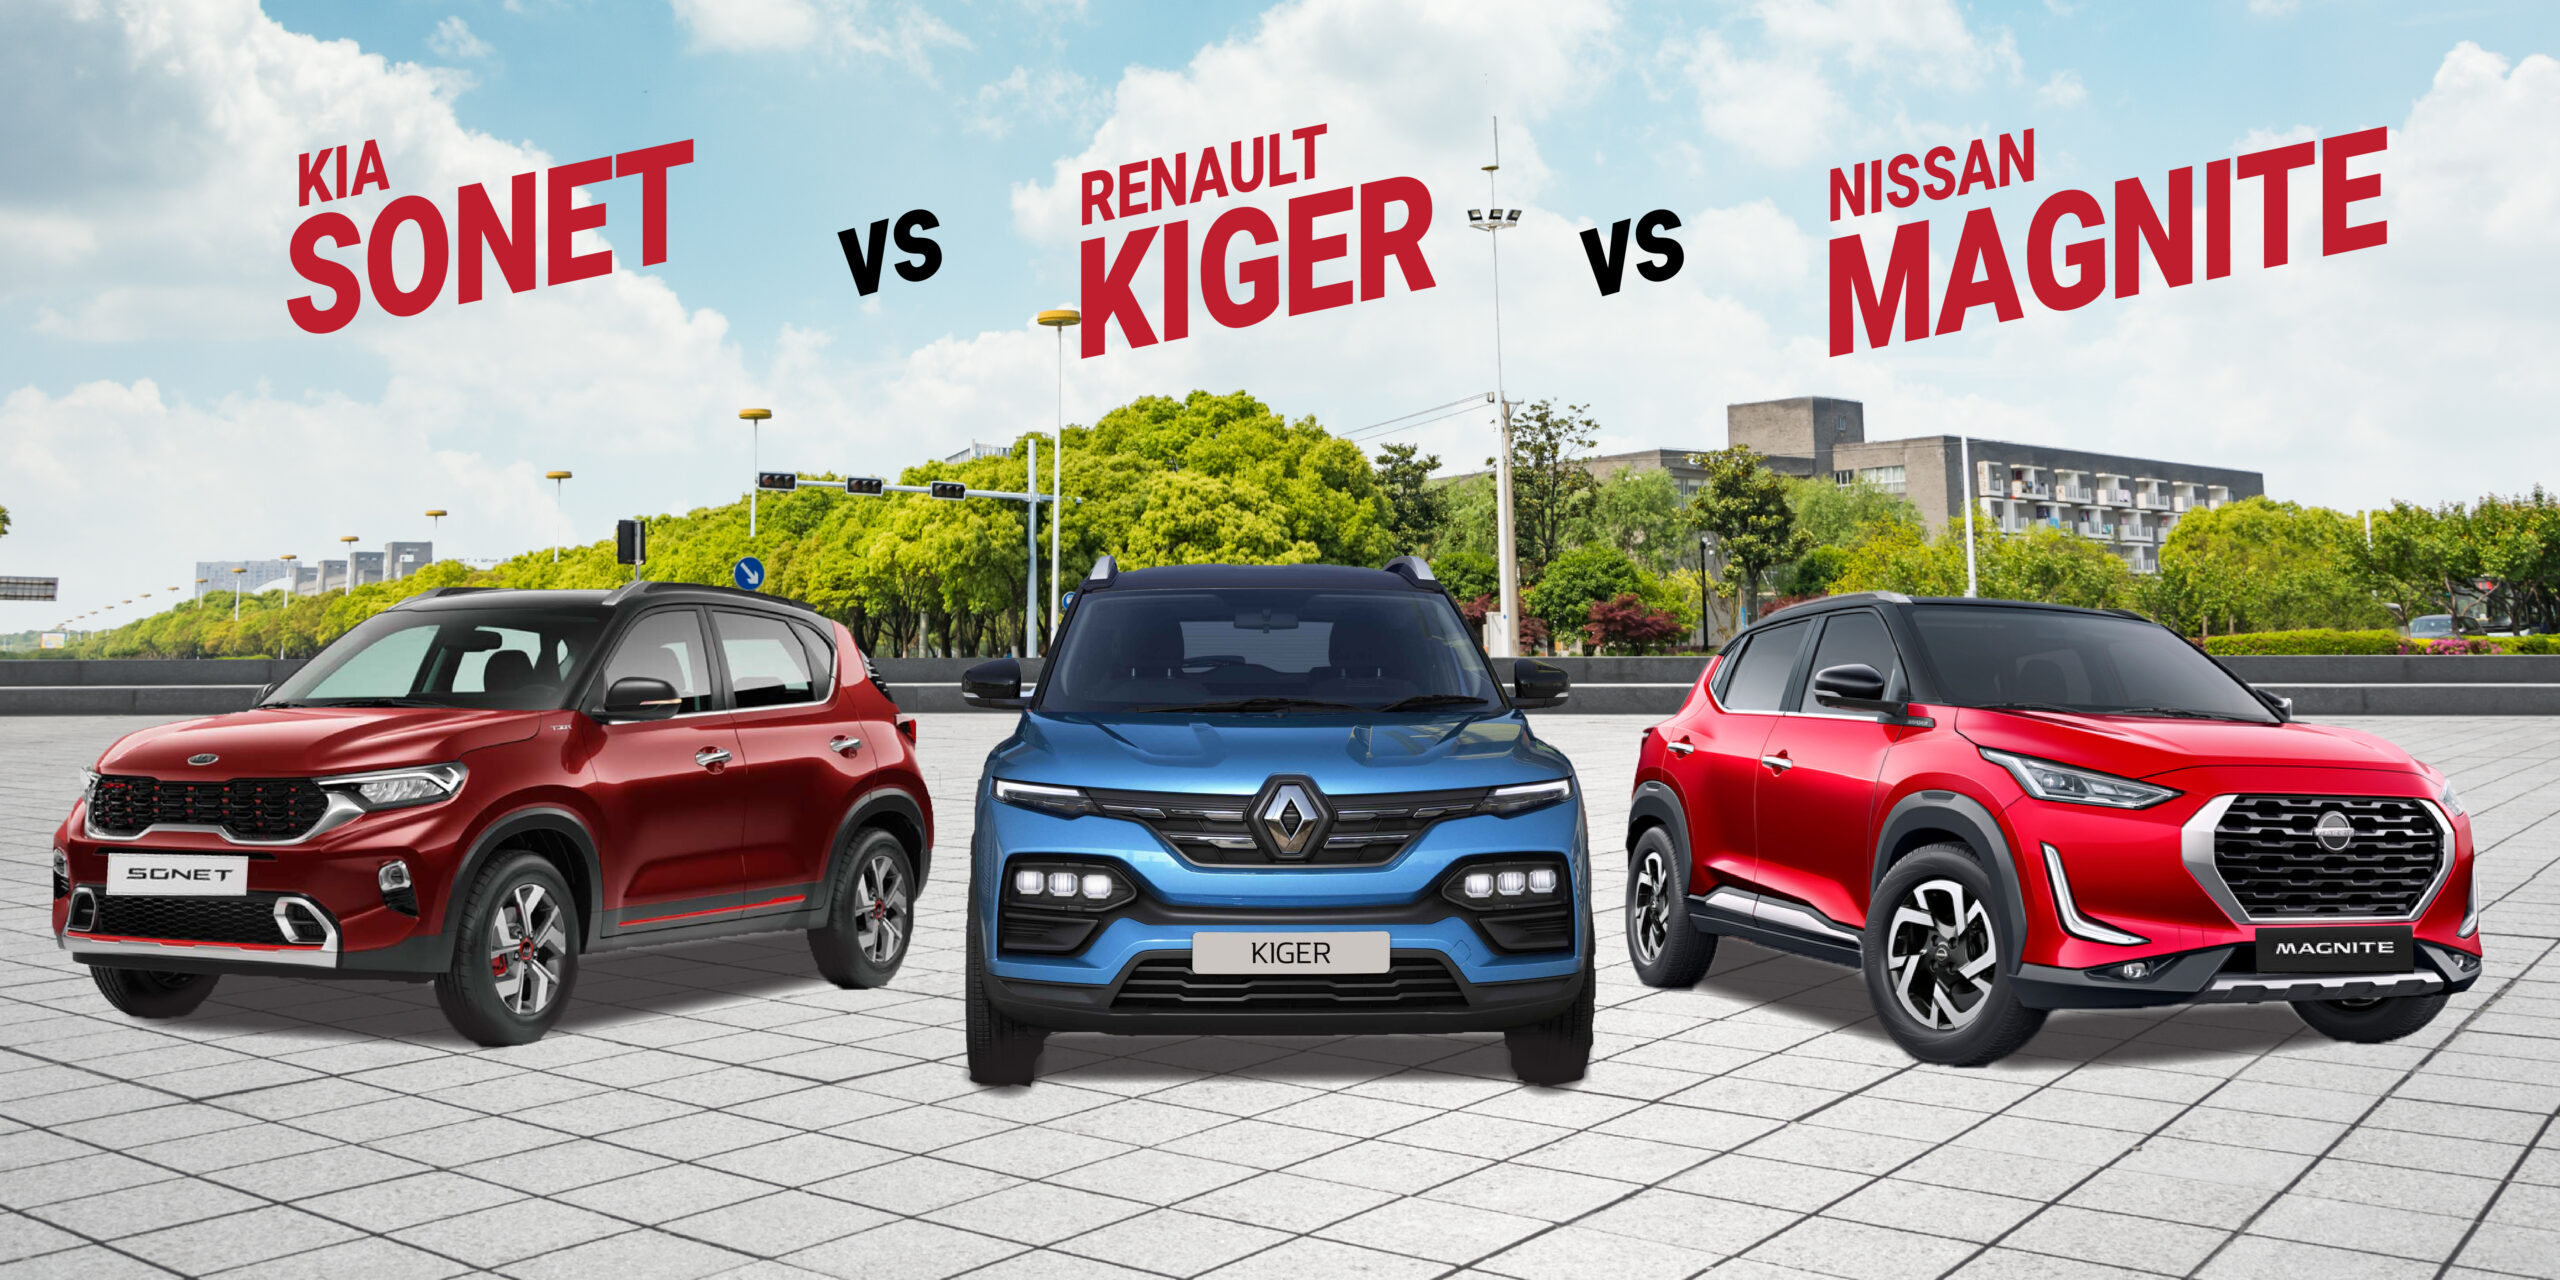 Renault Kiger vs Nissan Magnite vs Kia Sonet